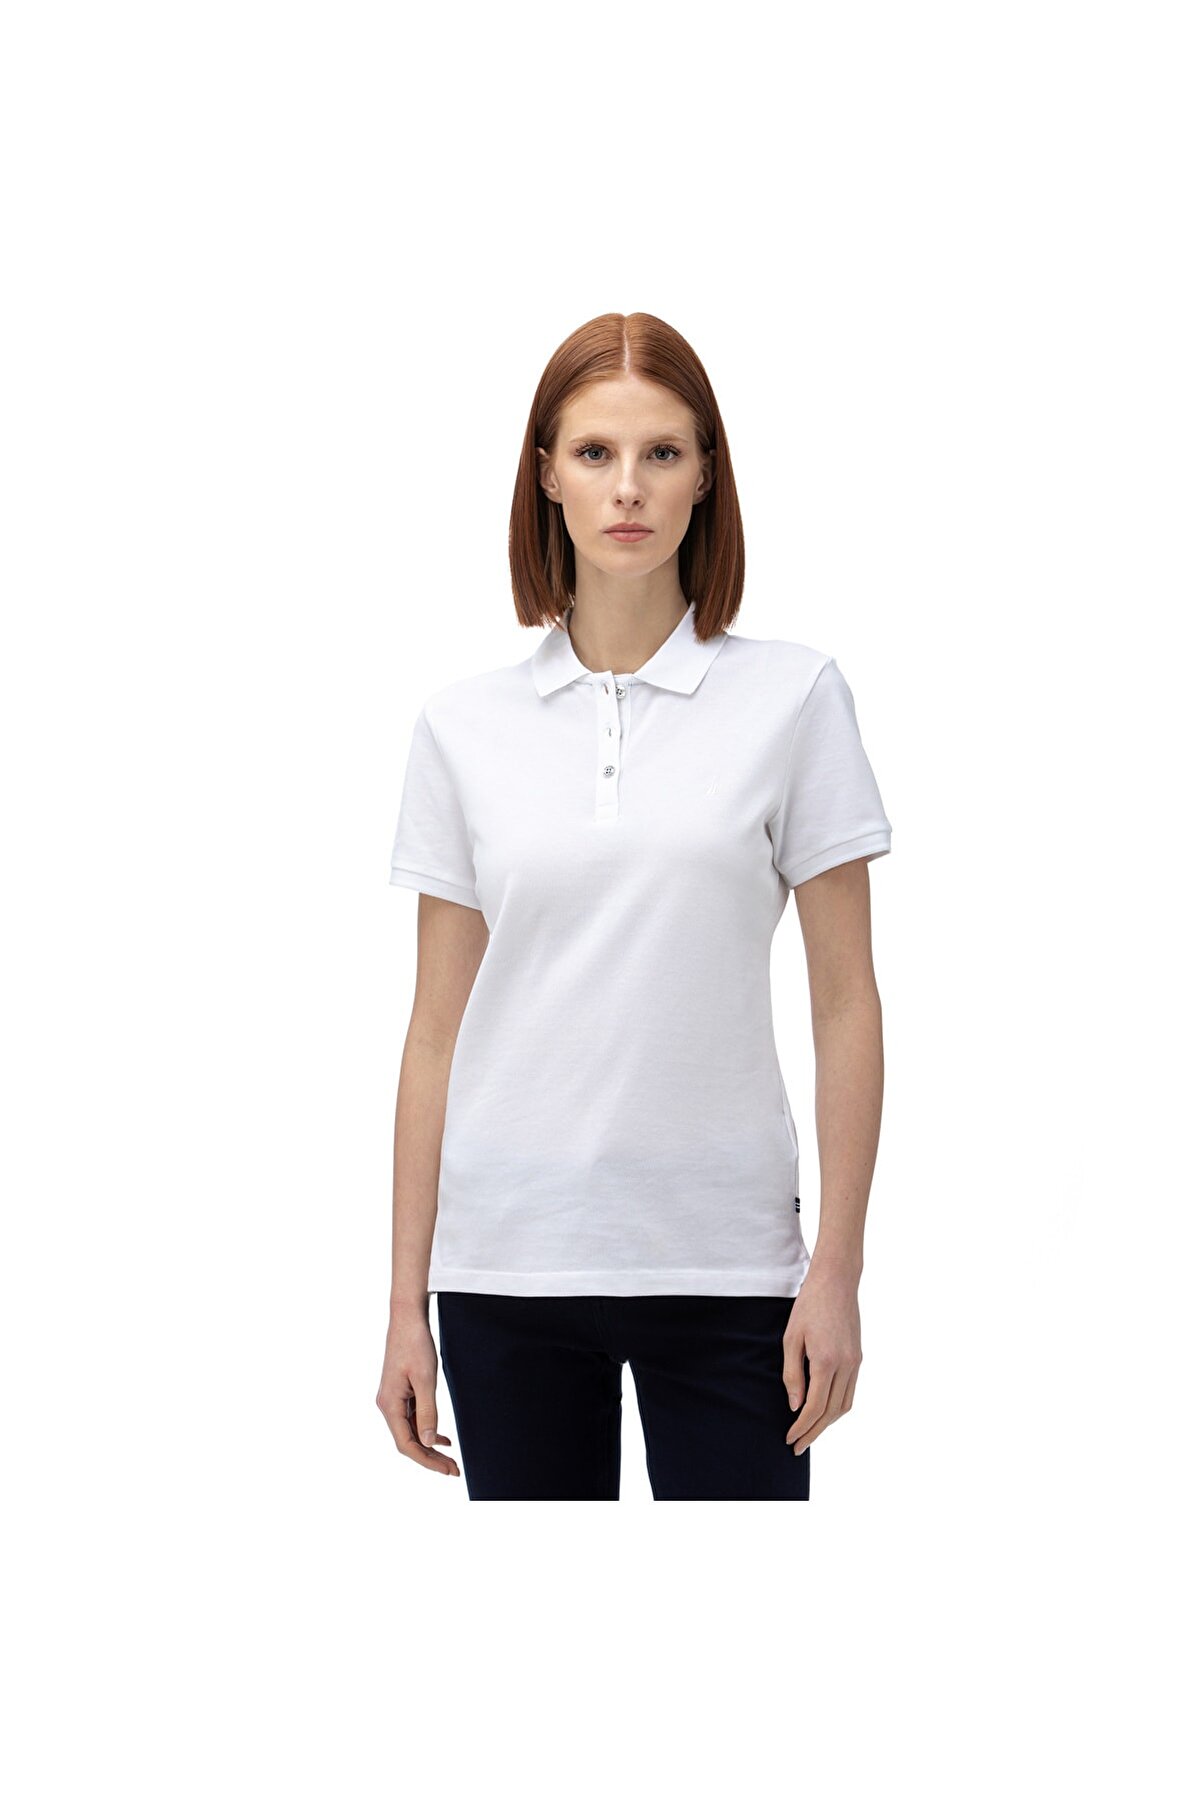 Nautica Kadın Beyaz Kısa Kollu Polo Yaka T-shirt 91K002T